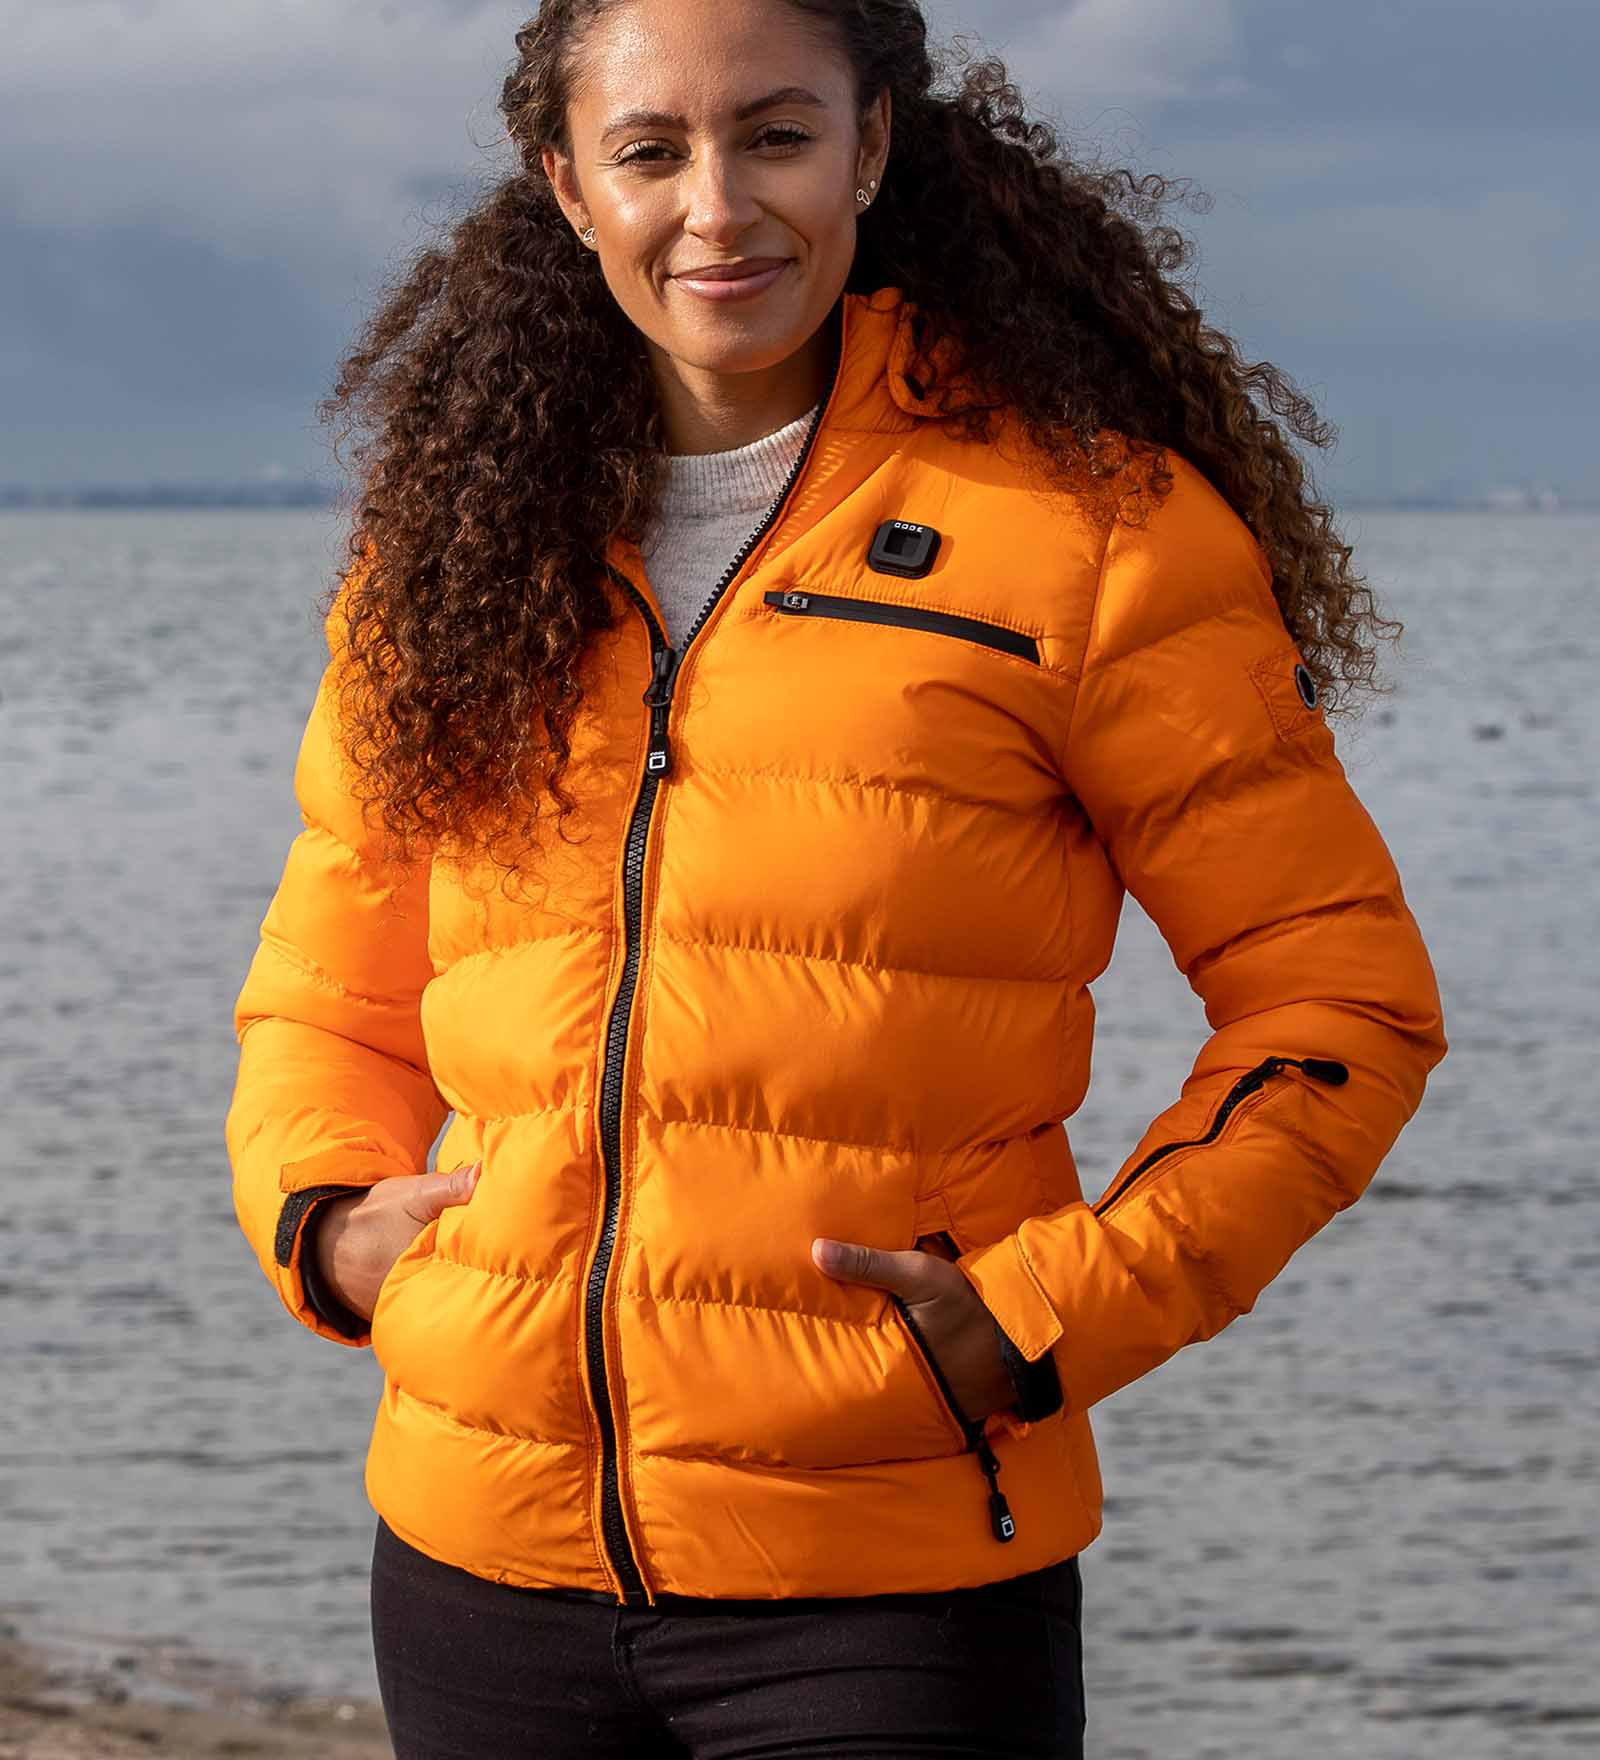 https://www.code-zero.com/uploads/media/c9/b2/6b/1667815746/winter-jacket-puffer-monte-baldo-women-orange-model.jpg